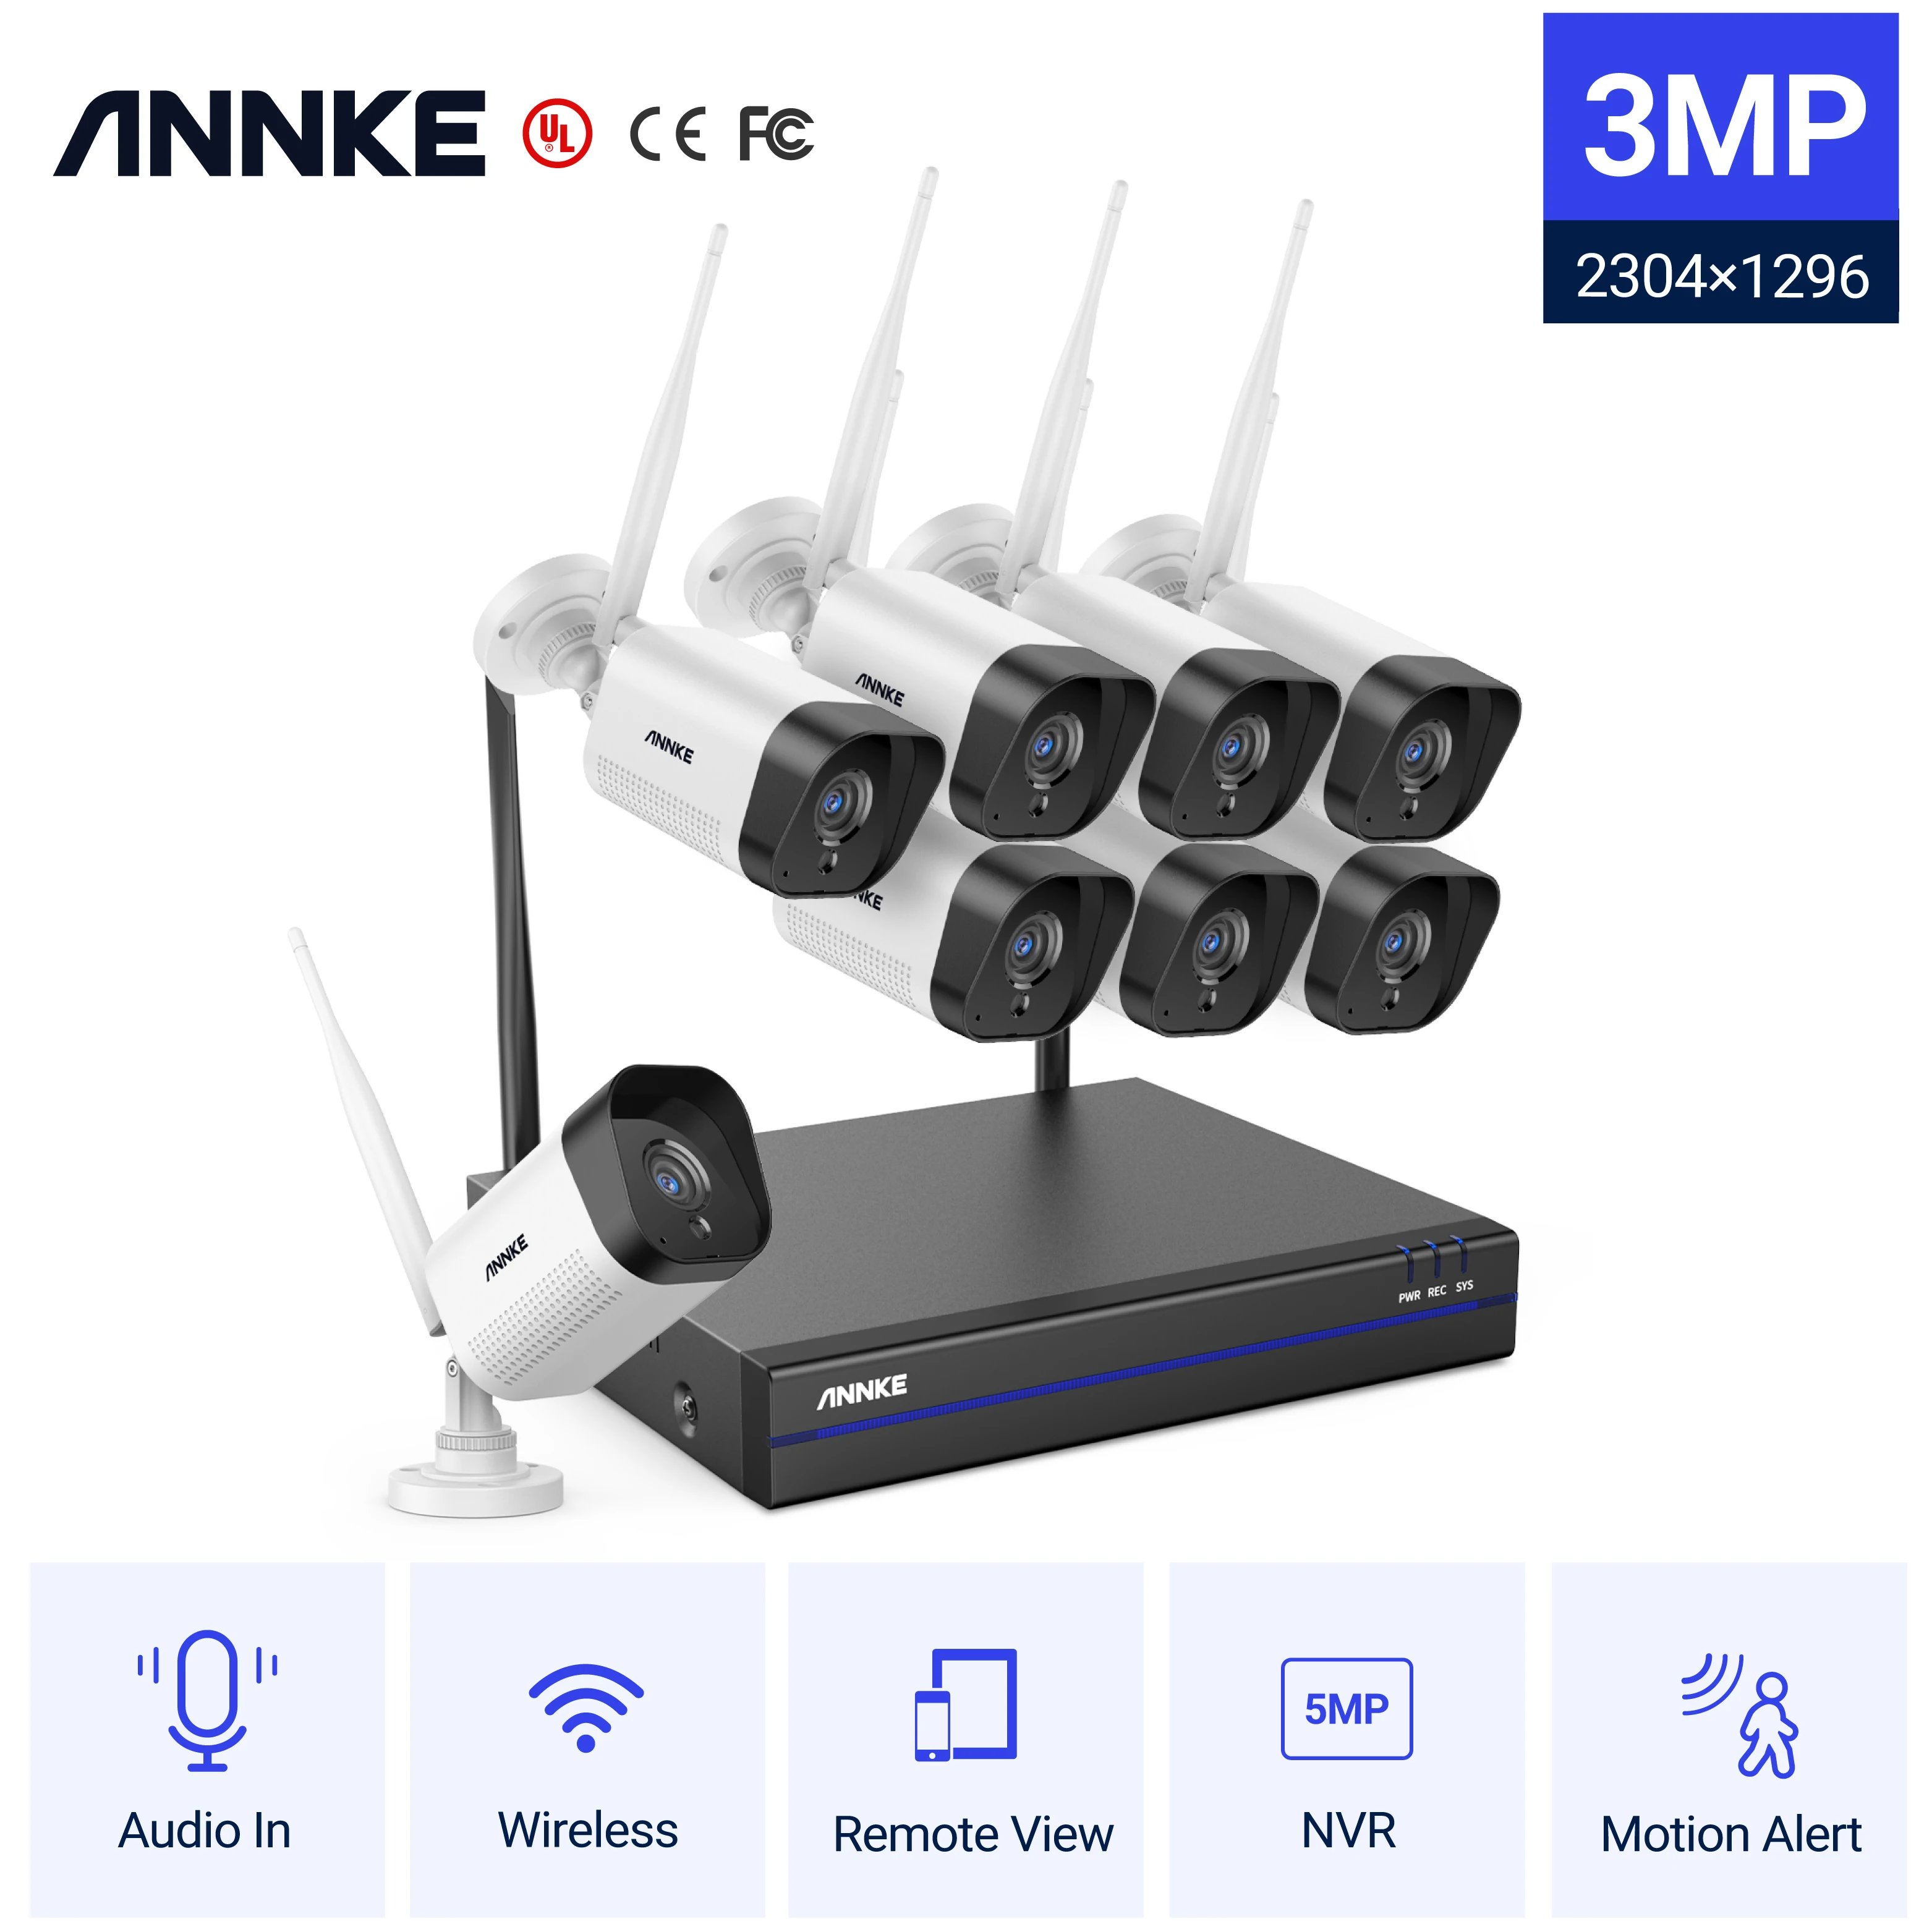 

ANNKE 3MP WiFi Video Surveillance System 5MP NVR 3MP IP Cameras Audio Recording Security Cameras AI Detection CCTV Cameras Kit